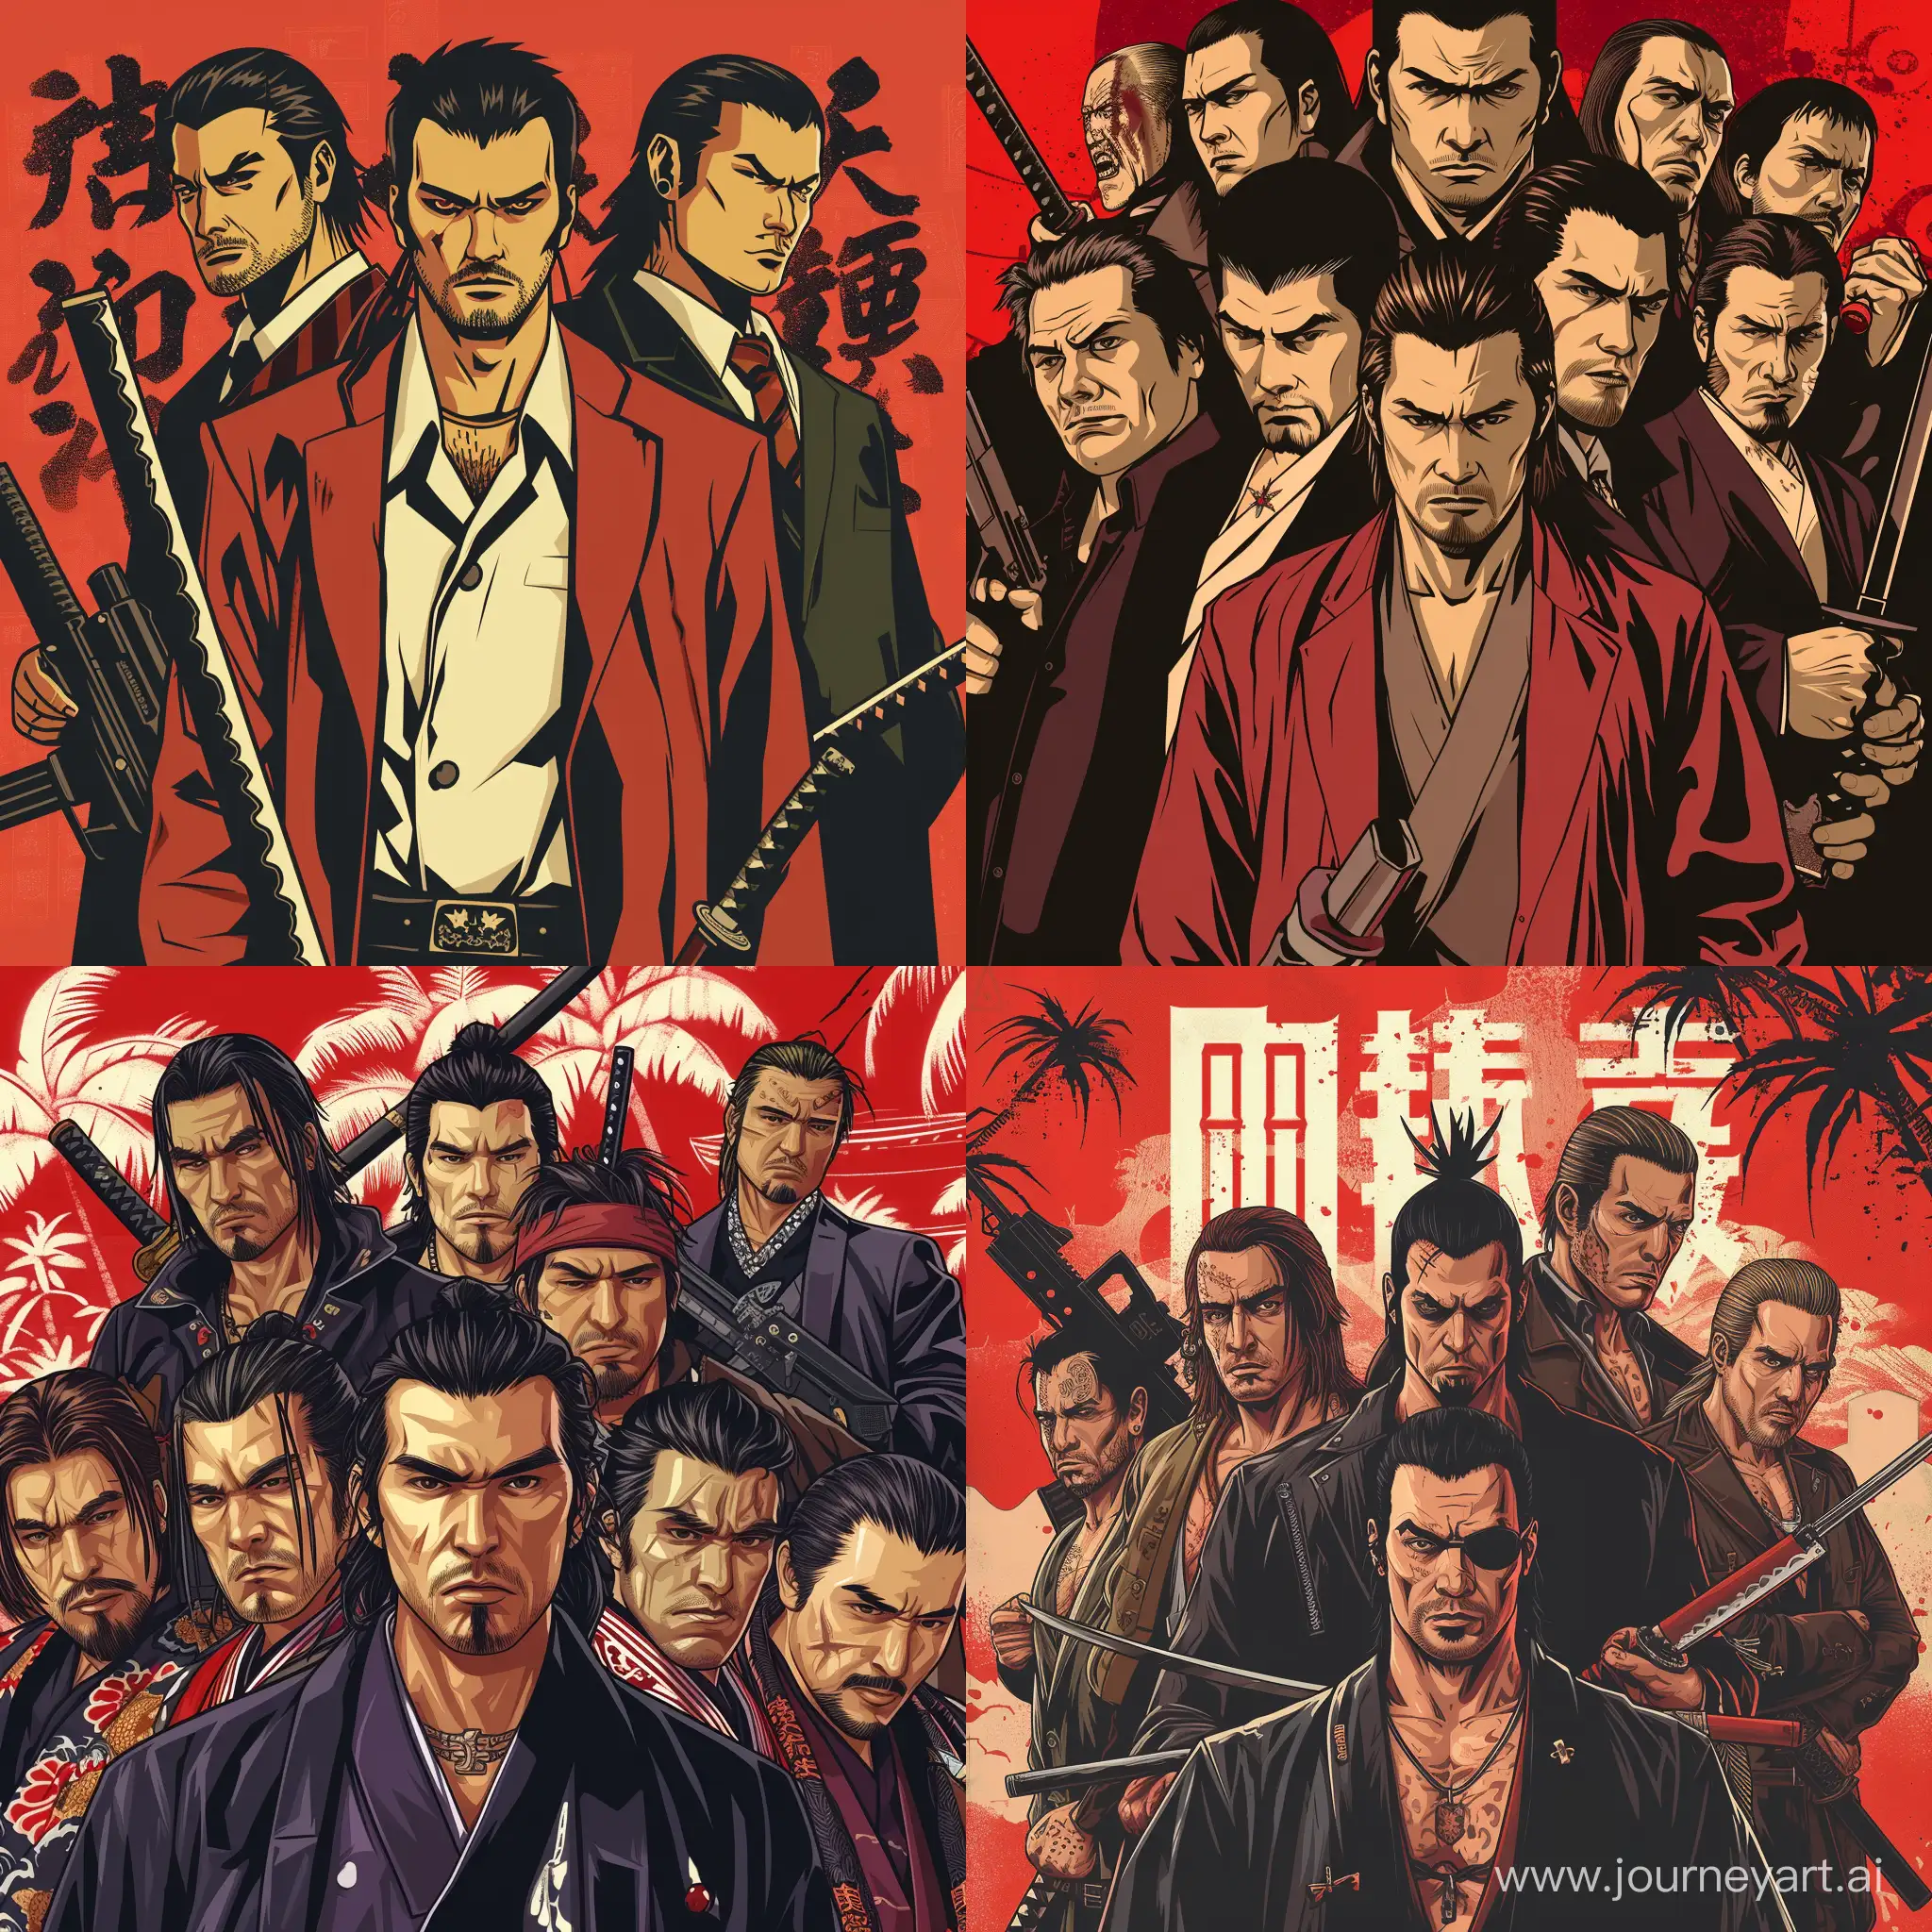 Yakuza-Gang-Members-with-Katana-in-GTA-San-Andreas-Style